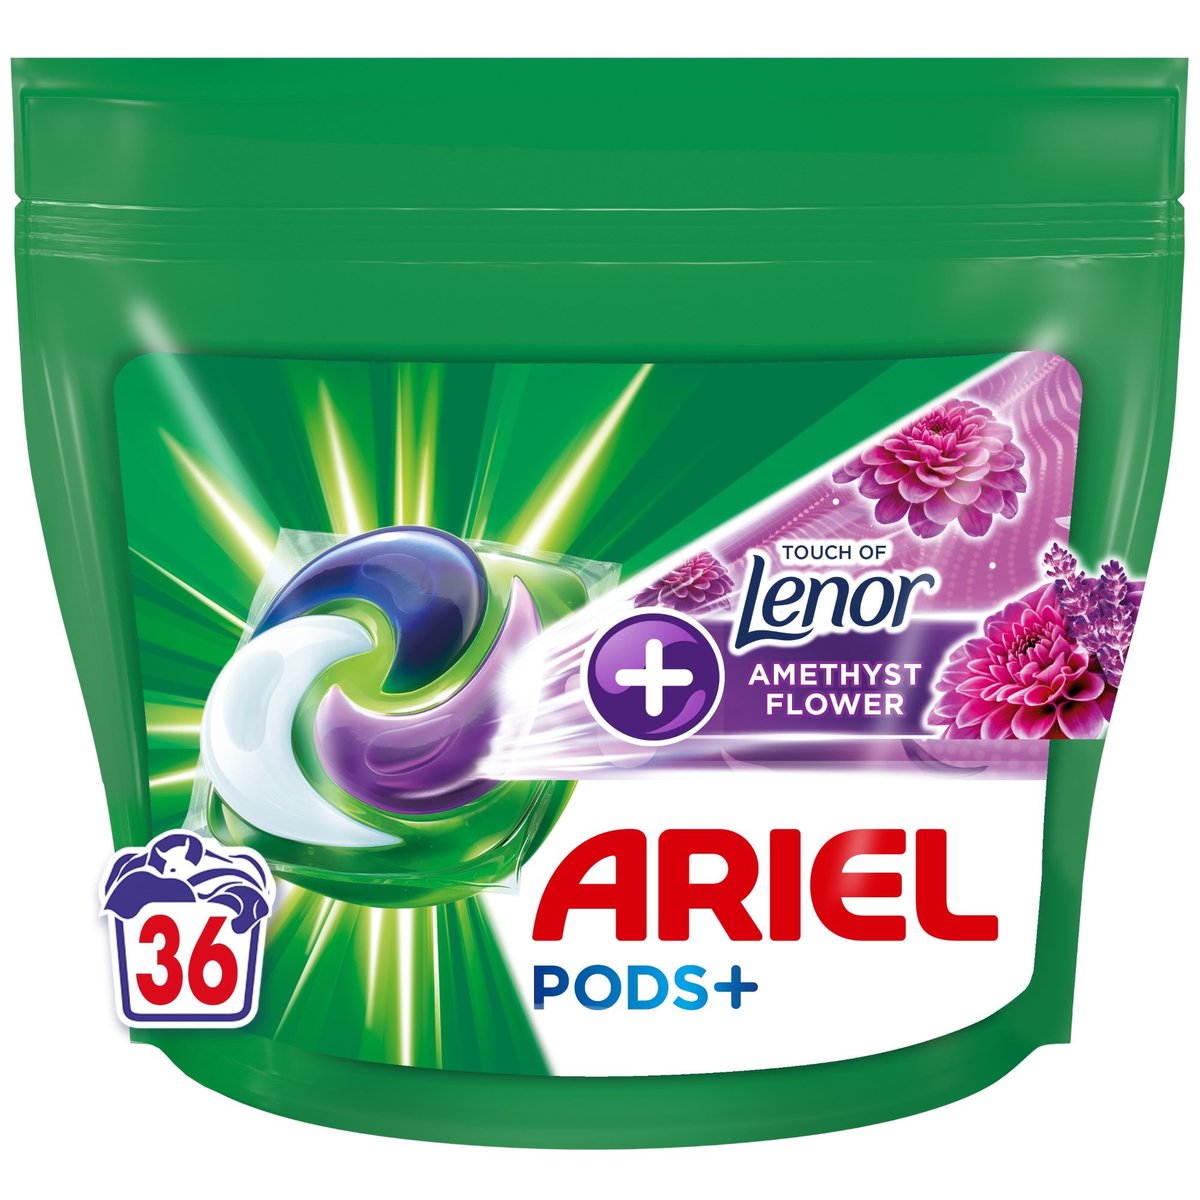 Ariel+ Touch of Lenor Amethyst Flower prací kapsle